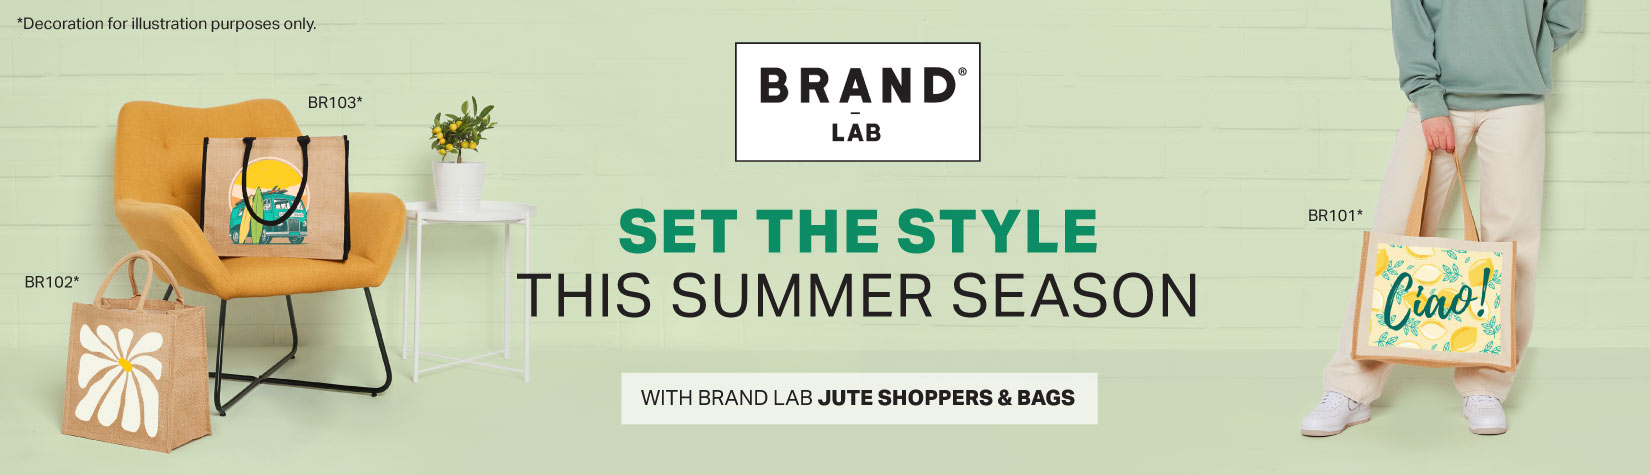 Brand Lab summer jute styles